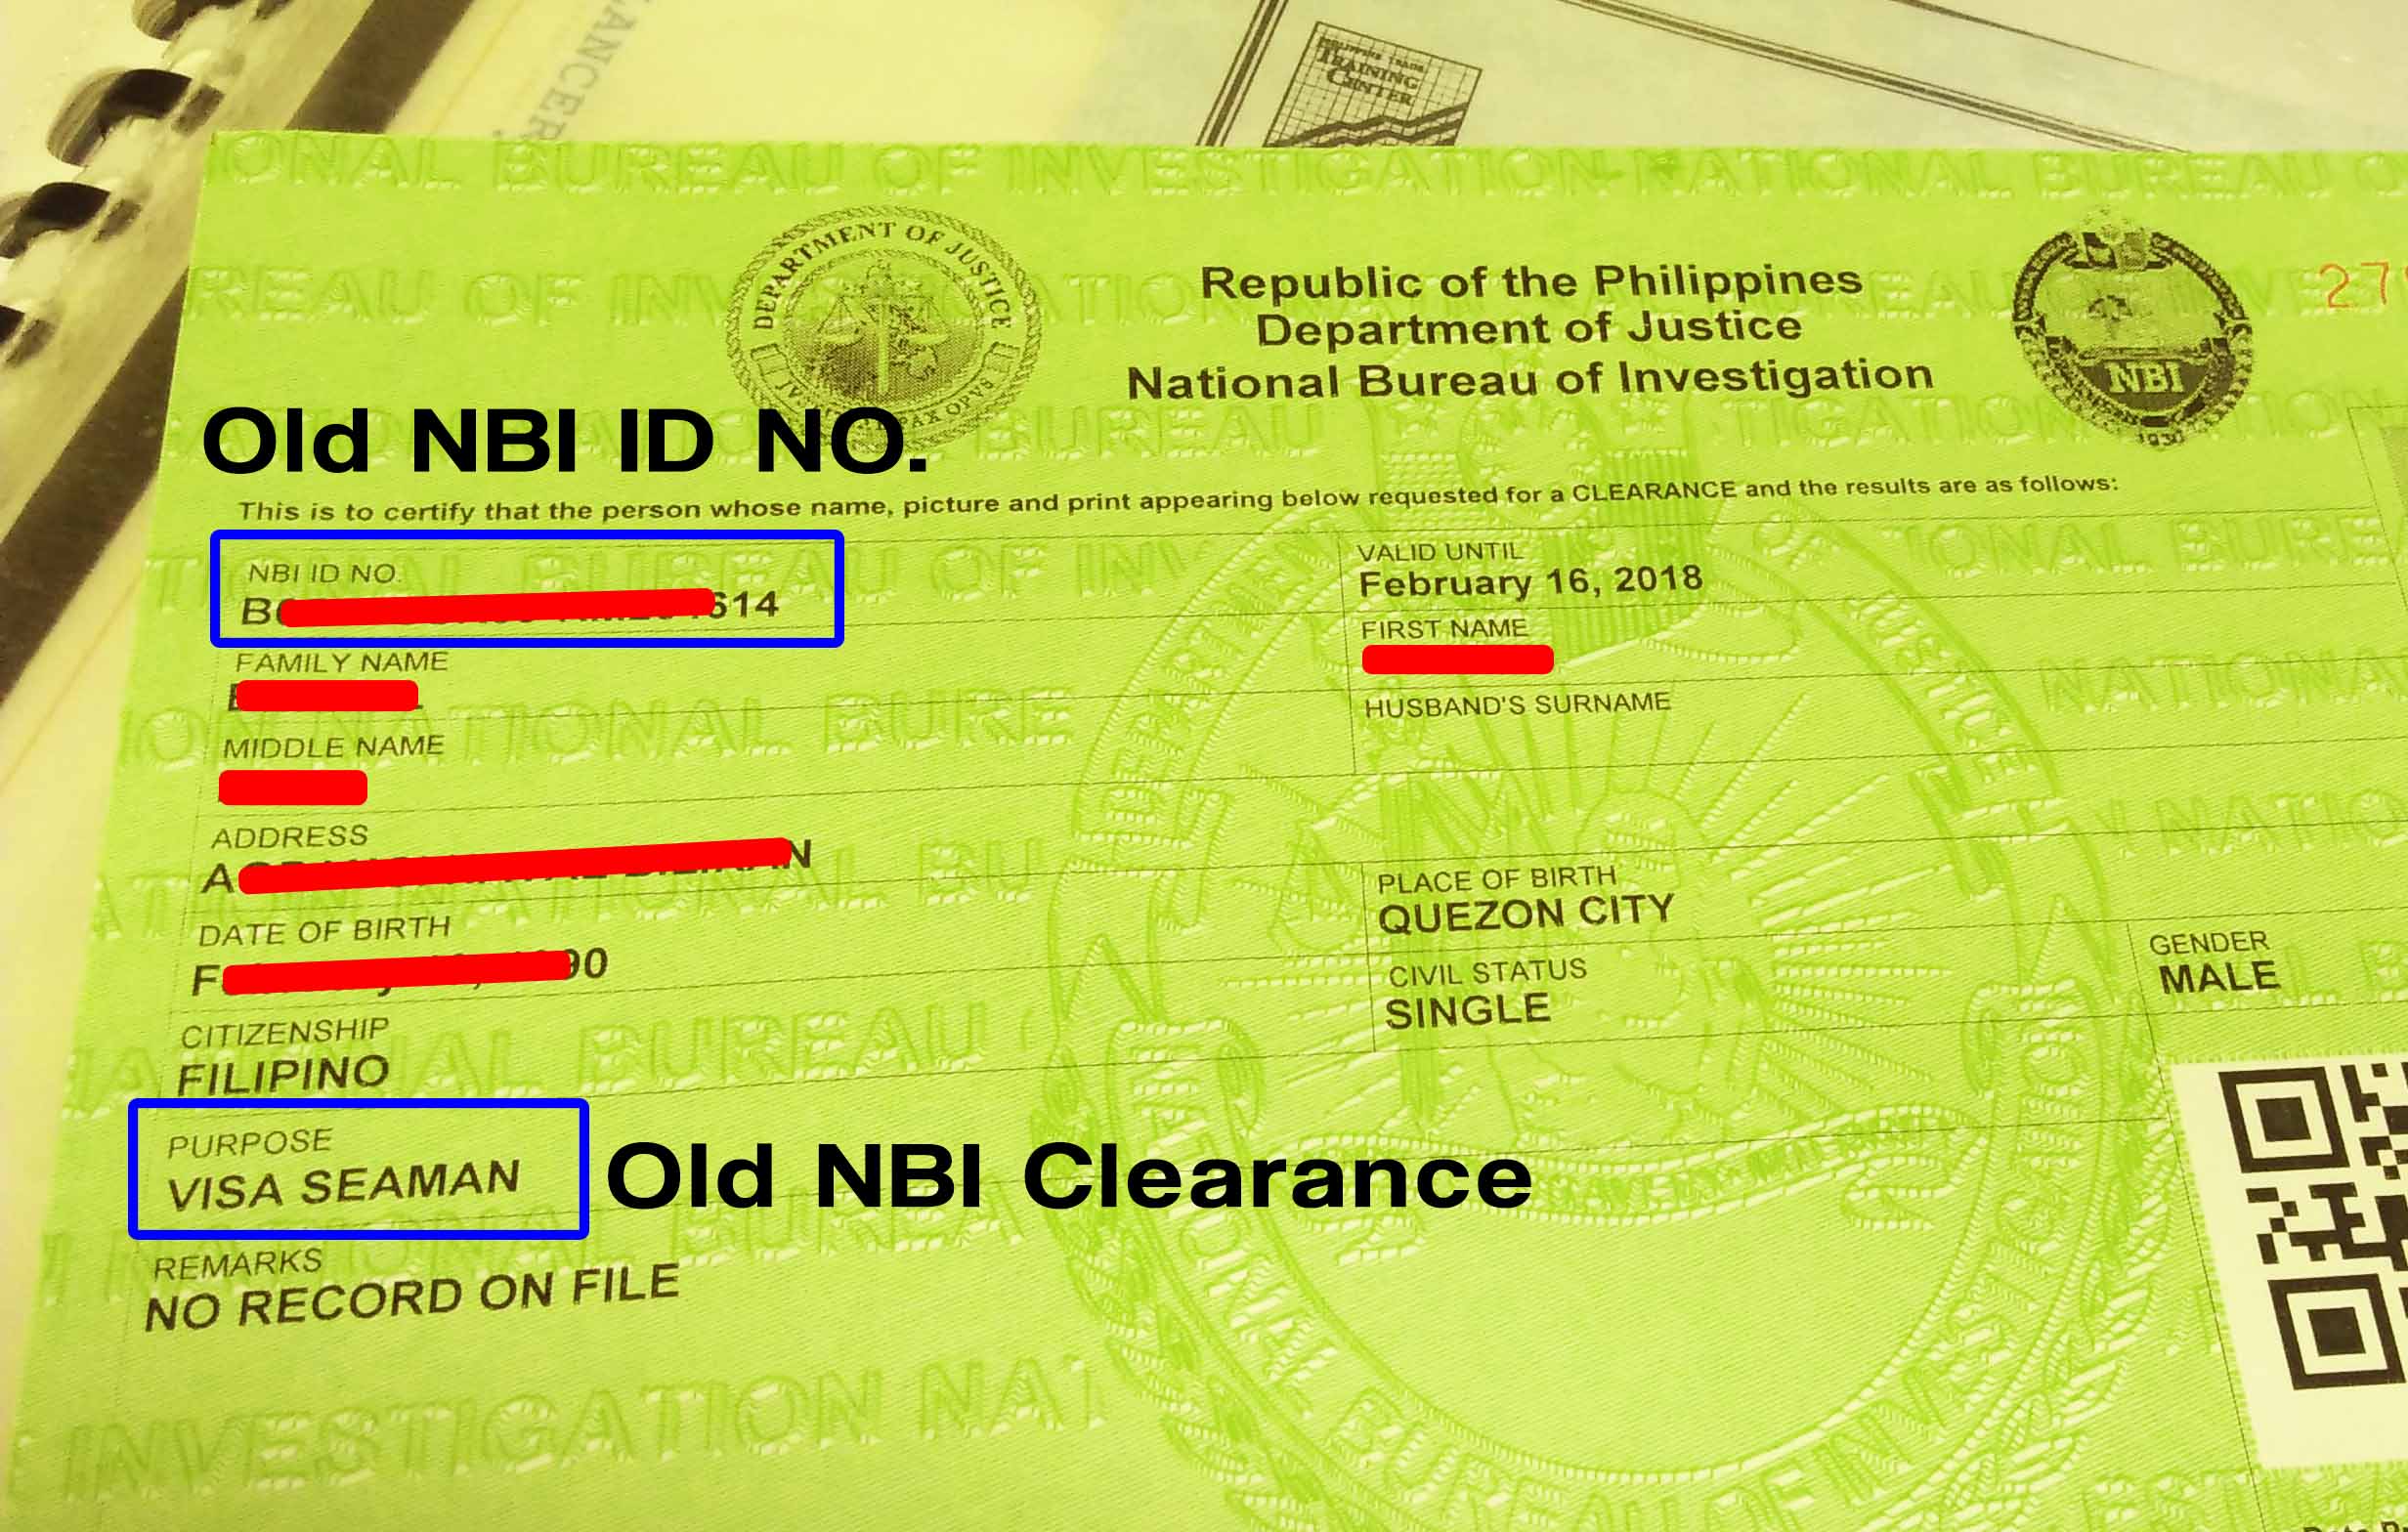 NBI Clearance renewal process